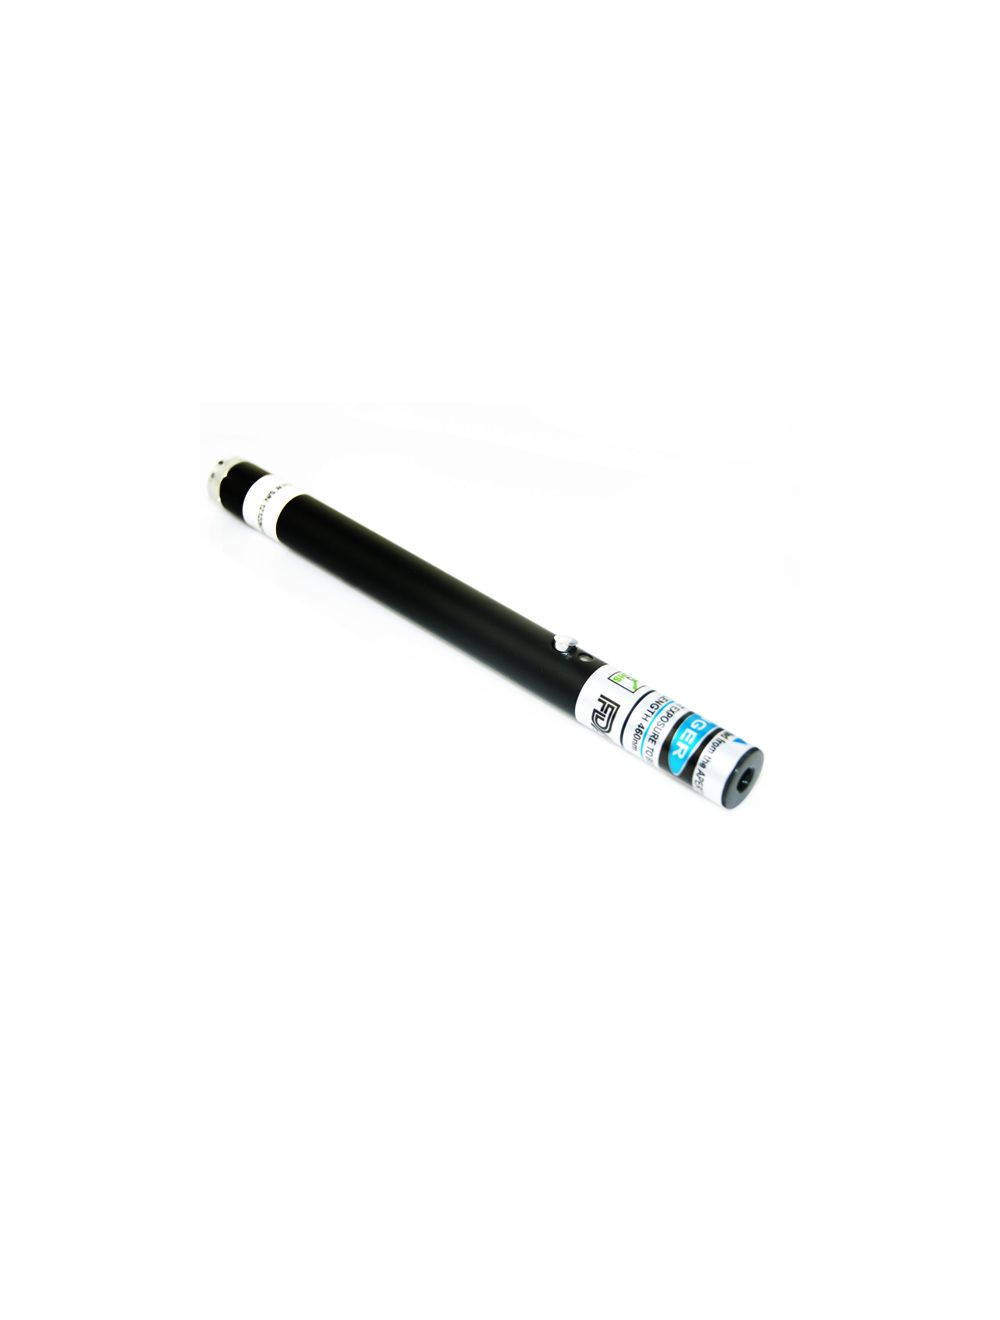 808p-200-808nm 5mw IR Infra-red Laser Pointer Pen for sale online 